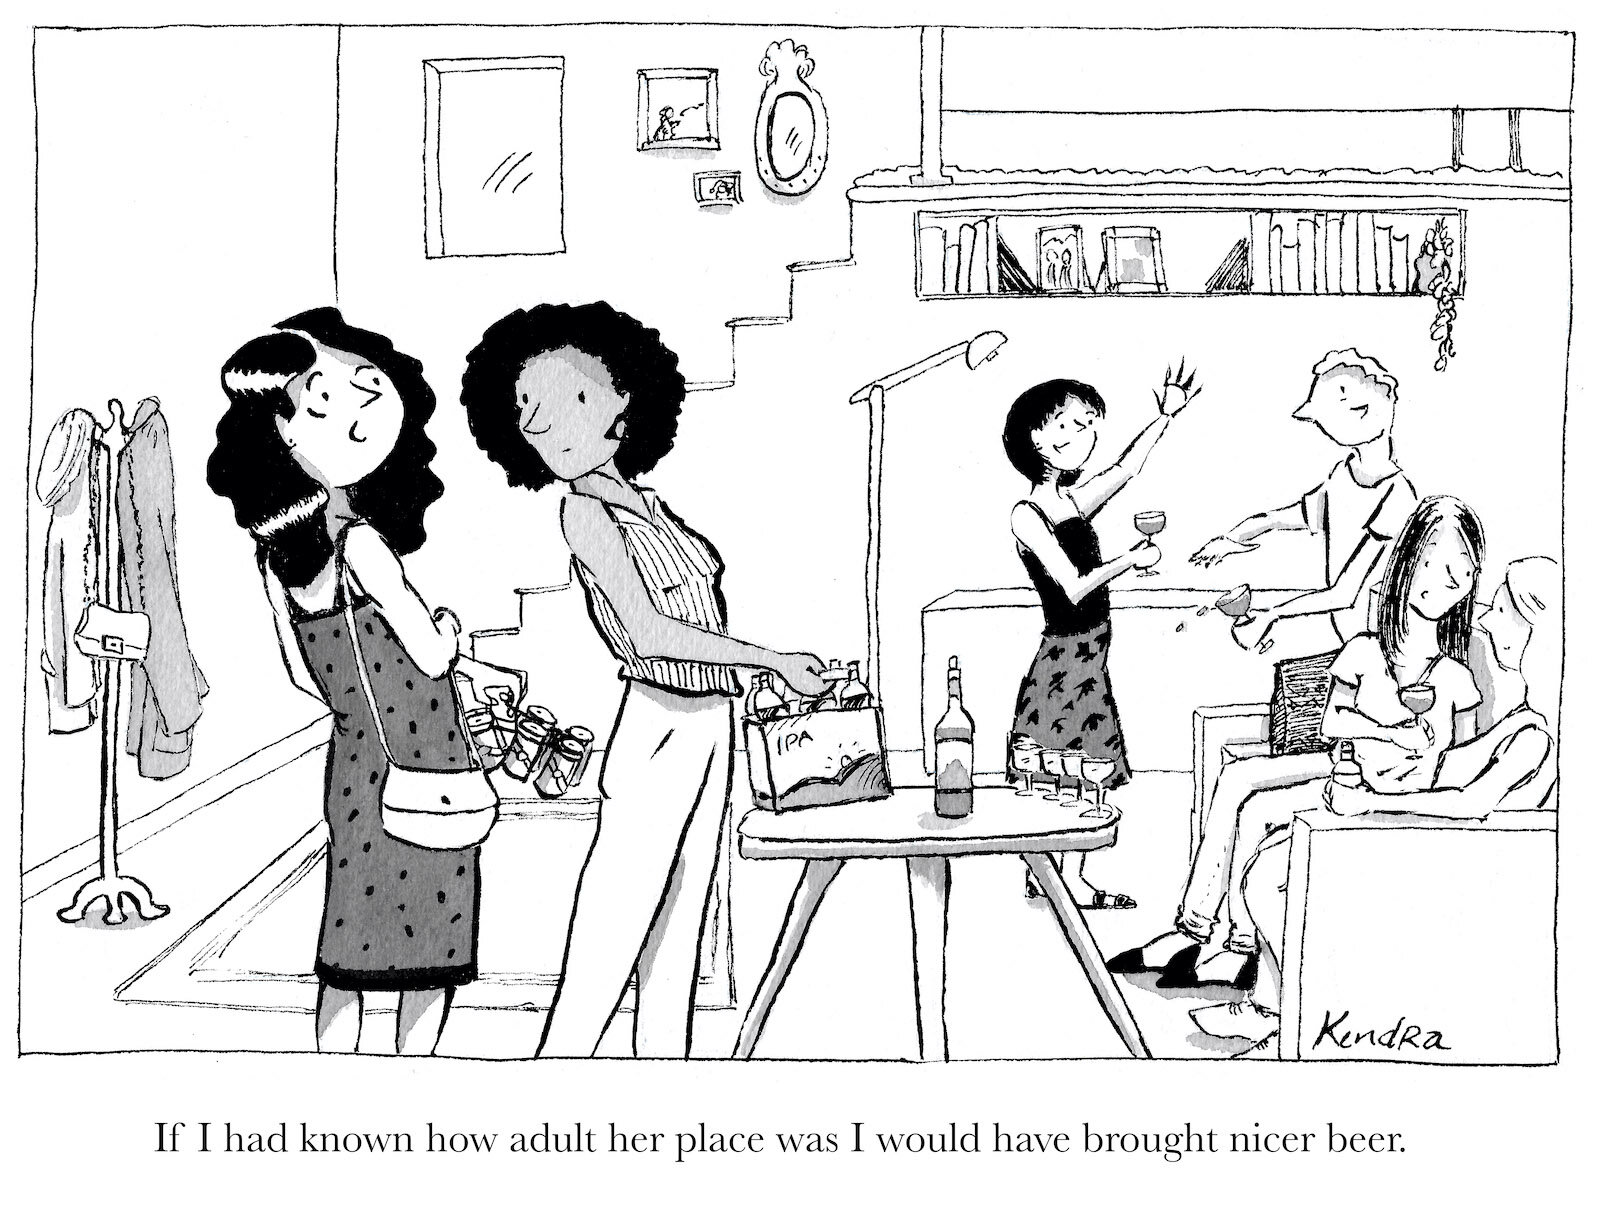 New Yorker Cartoons — Kendra Allenby - New Yorker Cartoonist